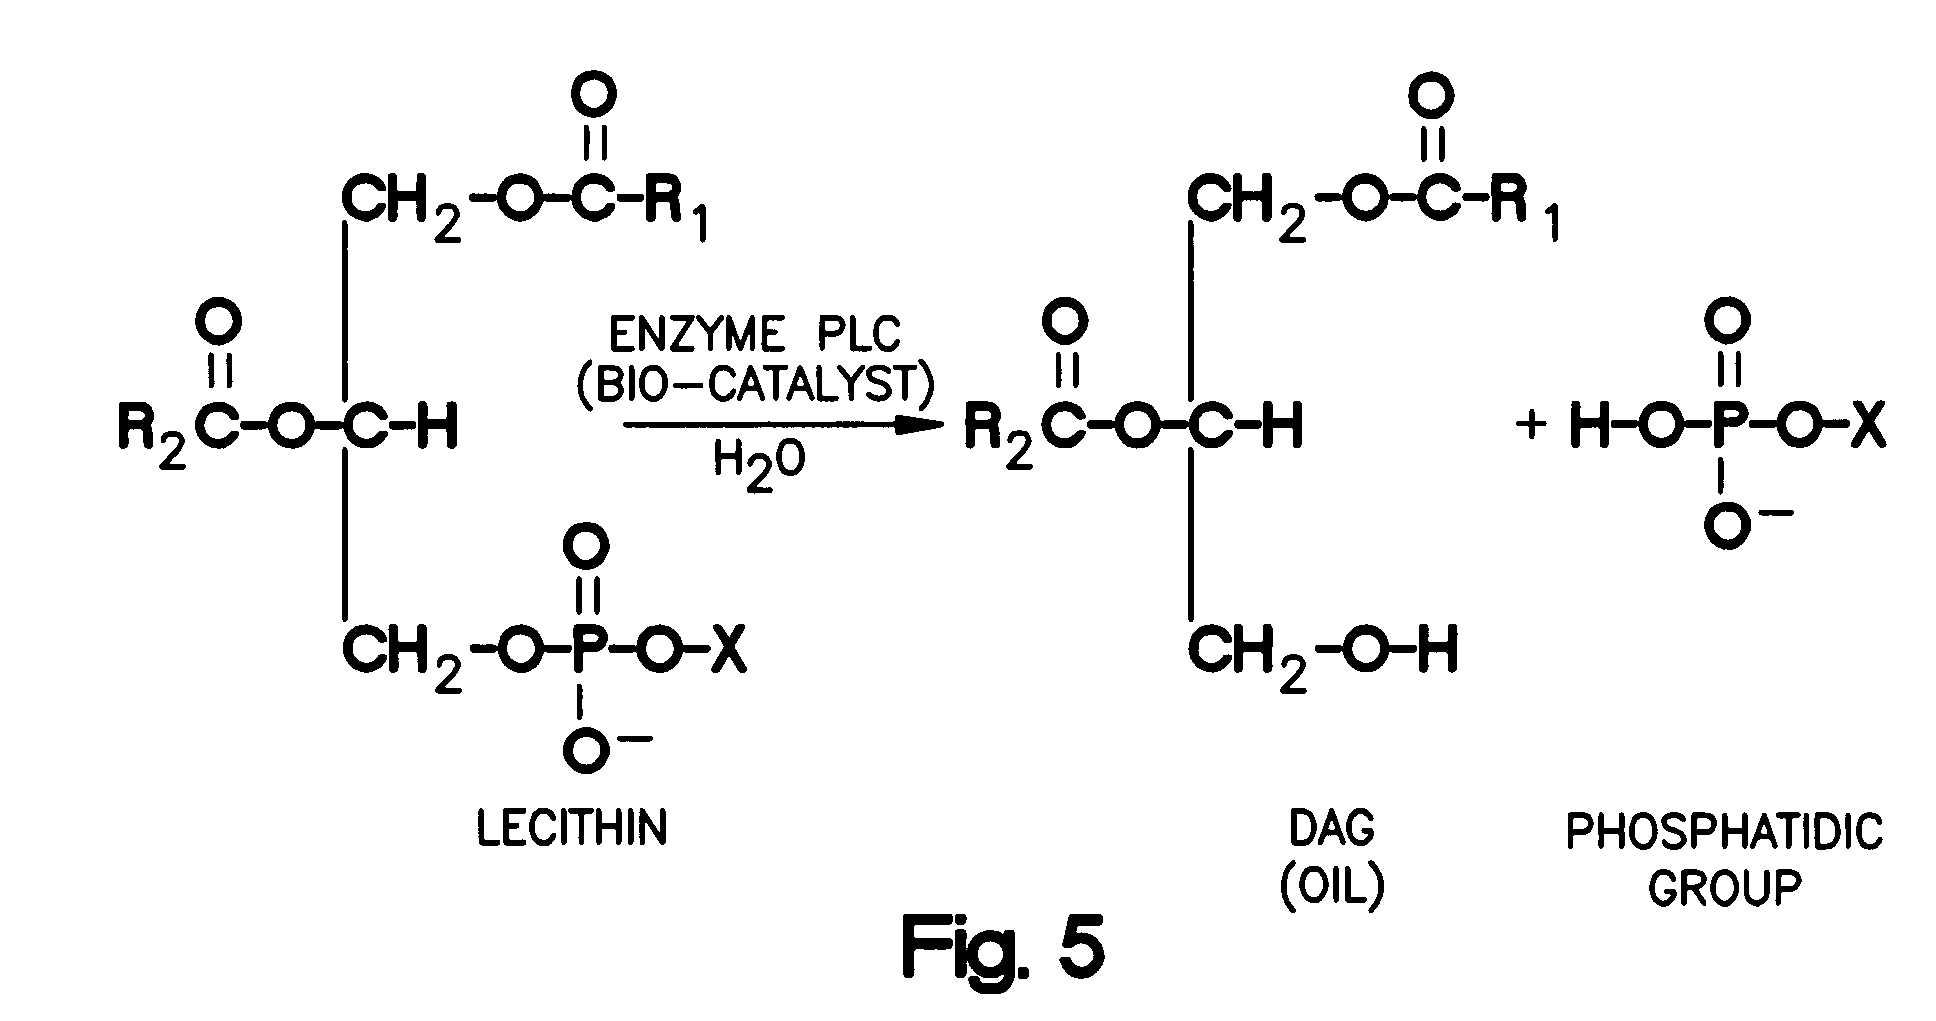 Enzymatic degumming utilizing a mixture of PLA and PLC phospholipases